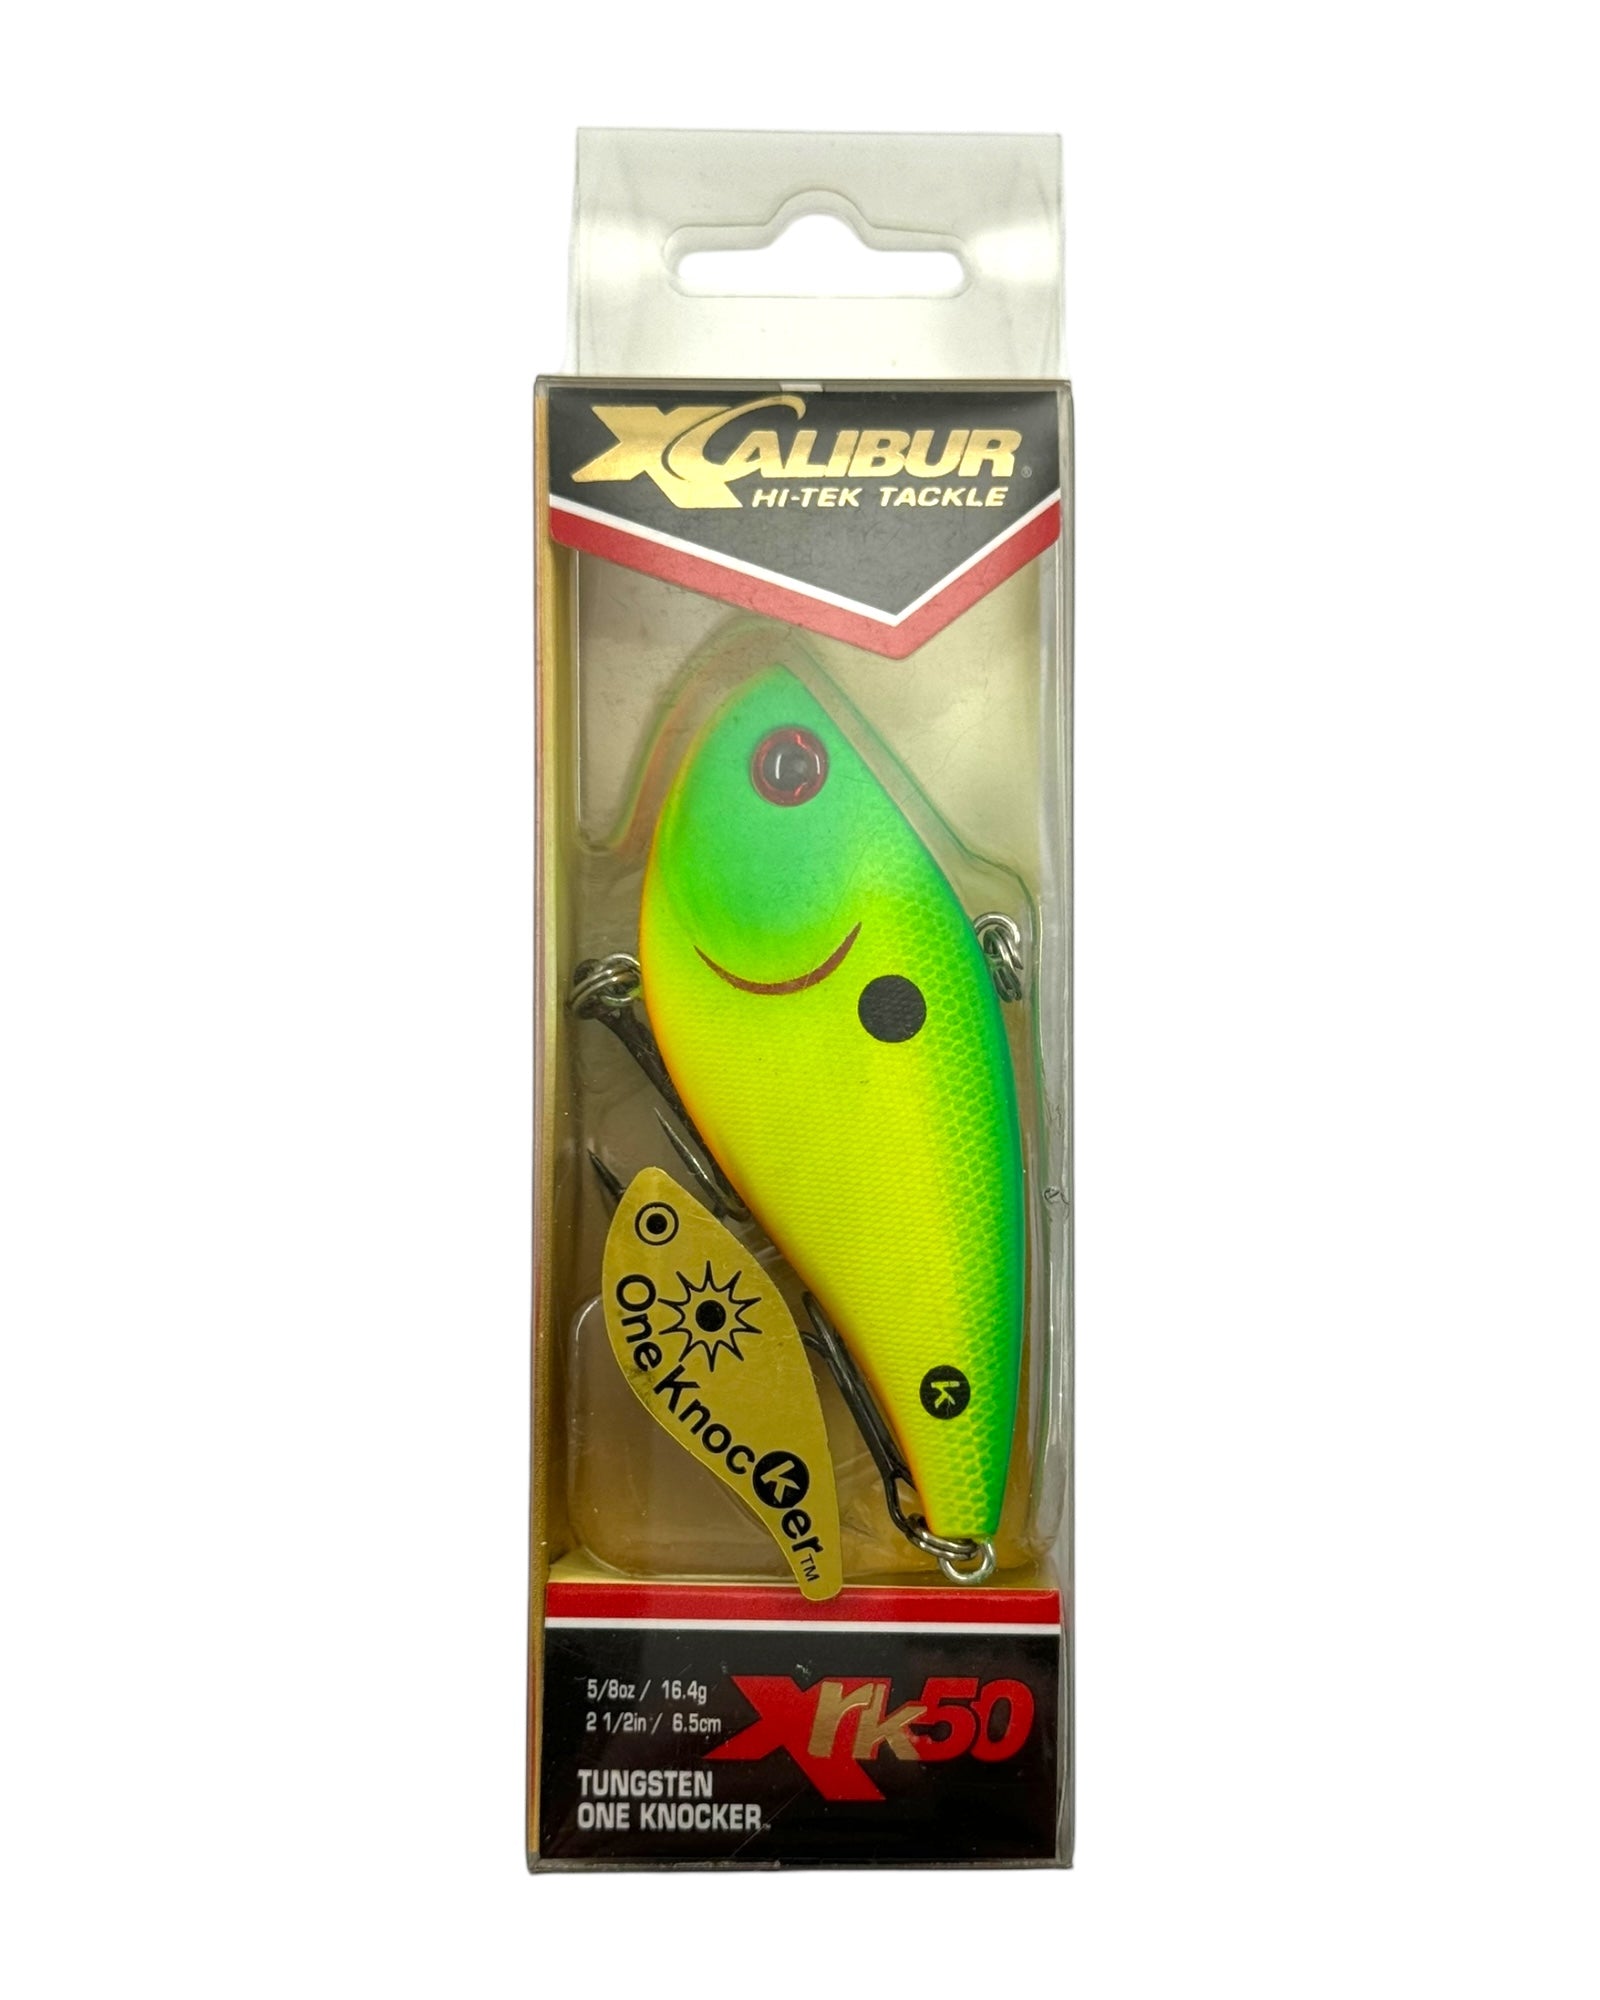 XCALIBUR TUNGSTEN 1 KNOCKER XRK50 Fishing Lure • LEMON LIME – Toad Tackle